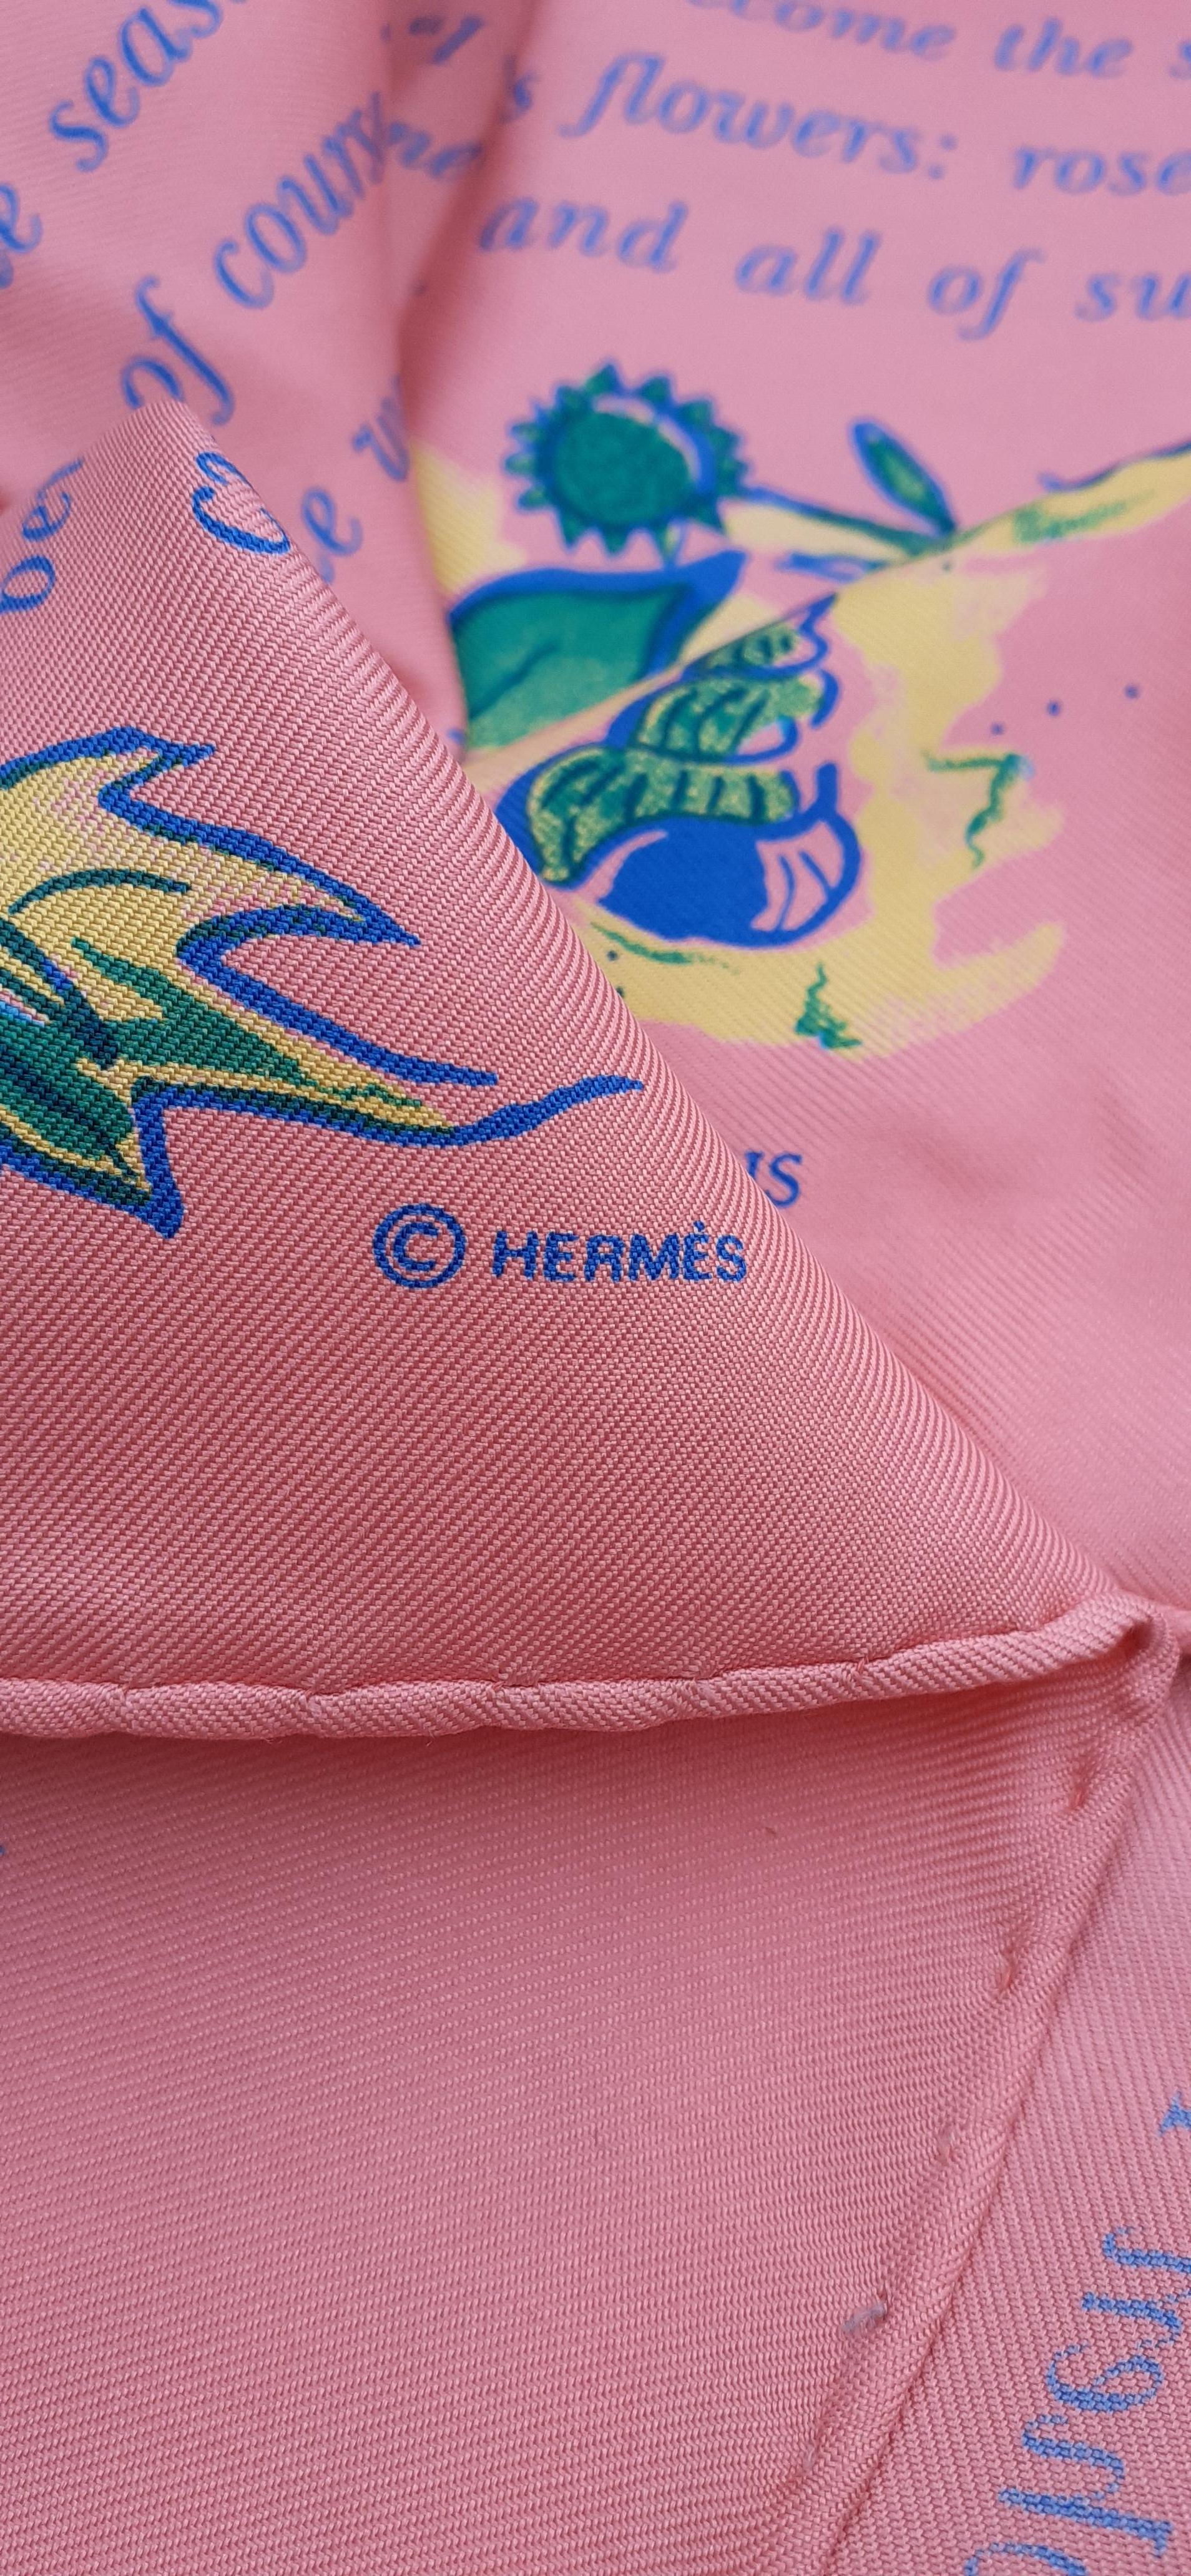 Hermès Silk Scarf Loula Summer Fairytale in English Limited Edition  For Sale 2